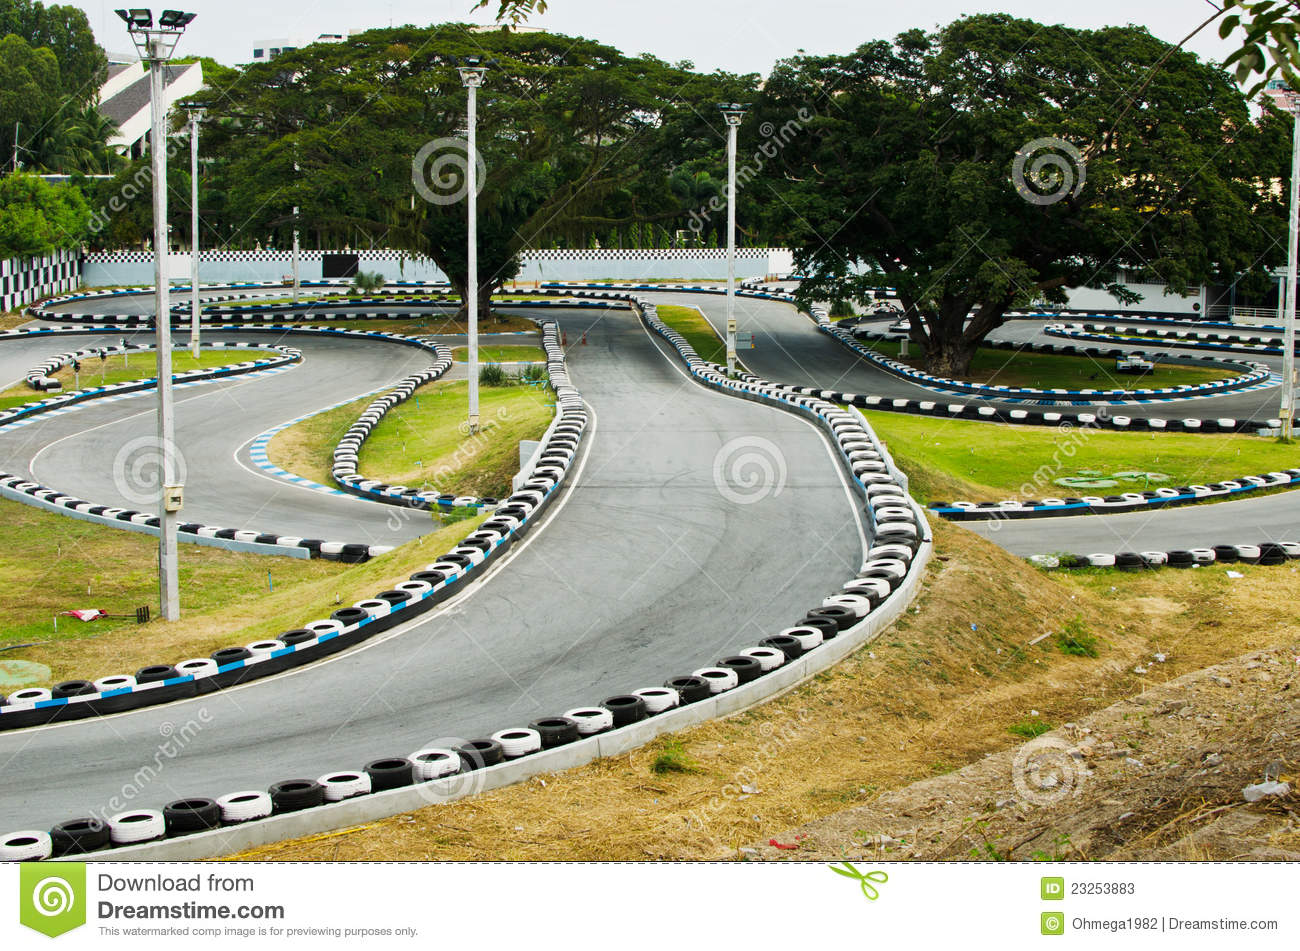 Go Kart Race Track  Stock Photos   Image  23253883